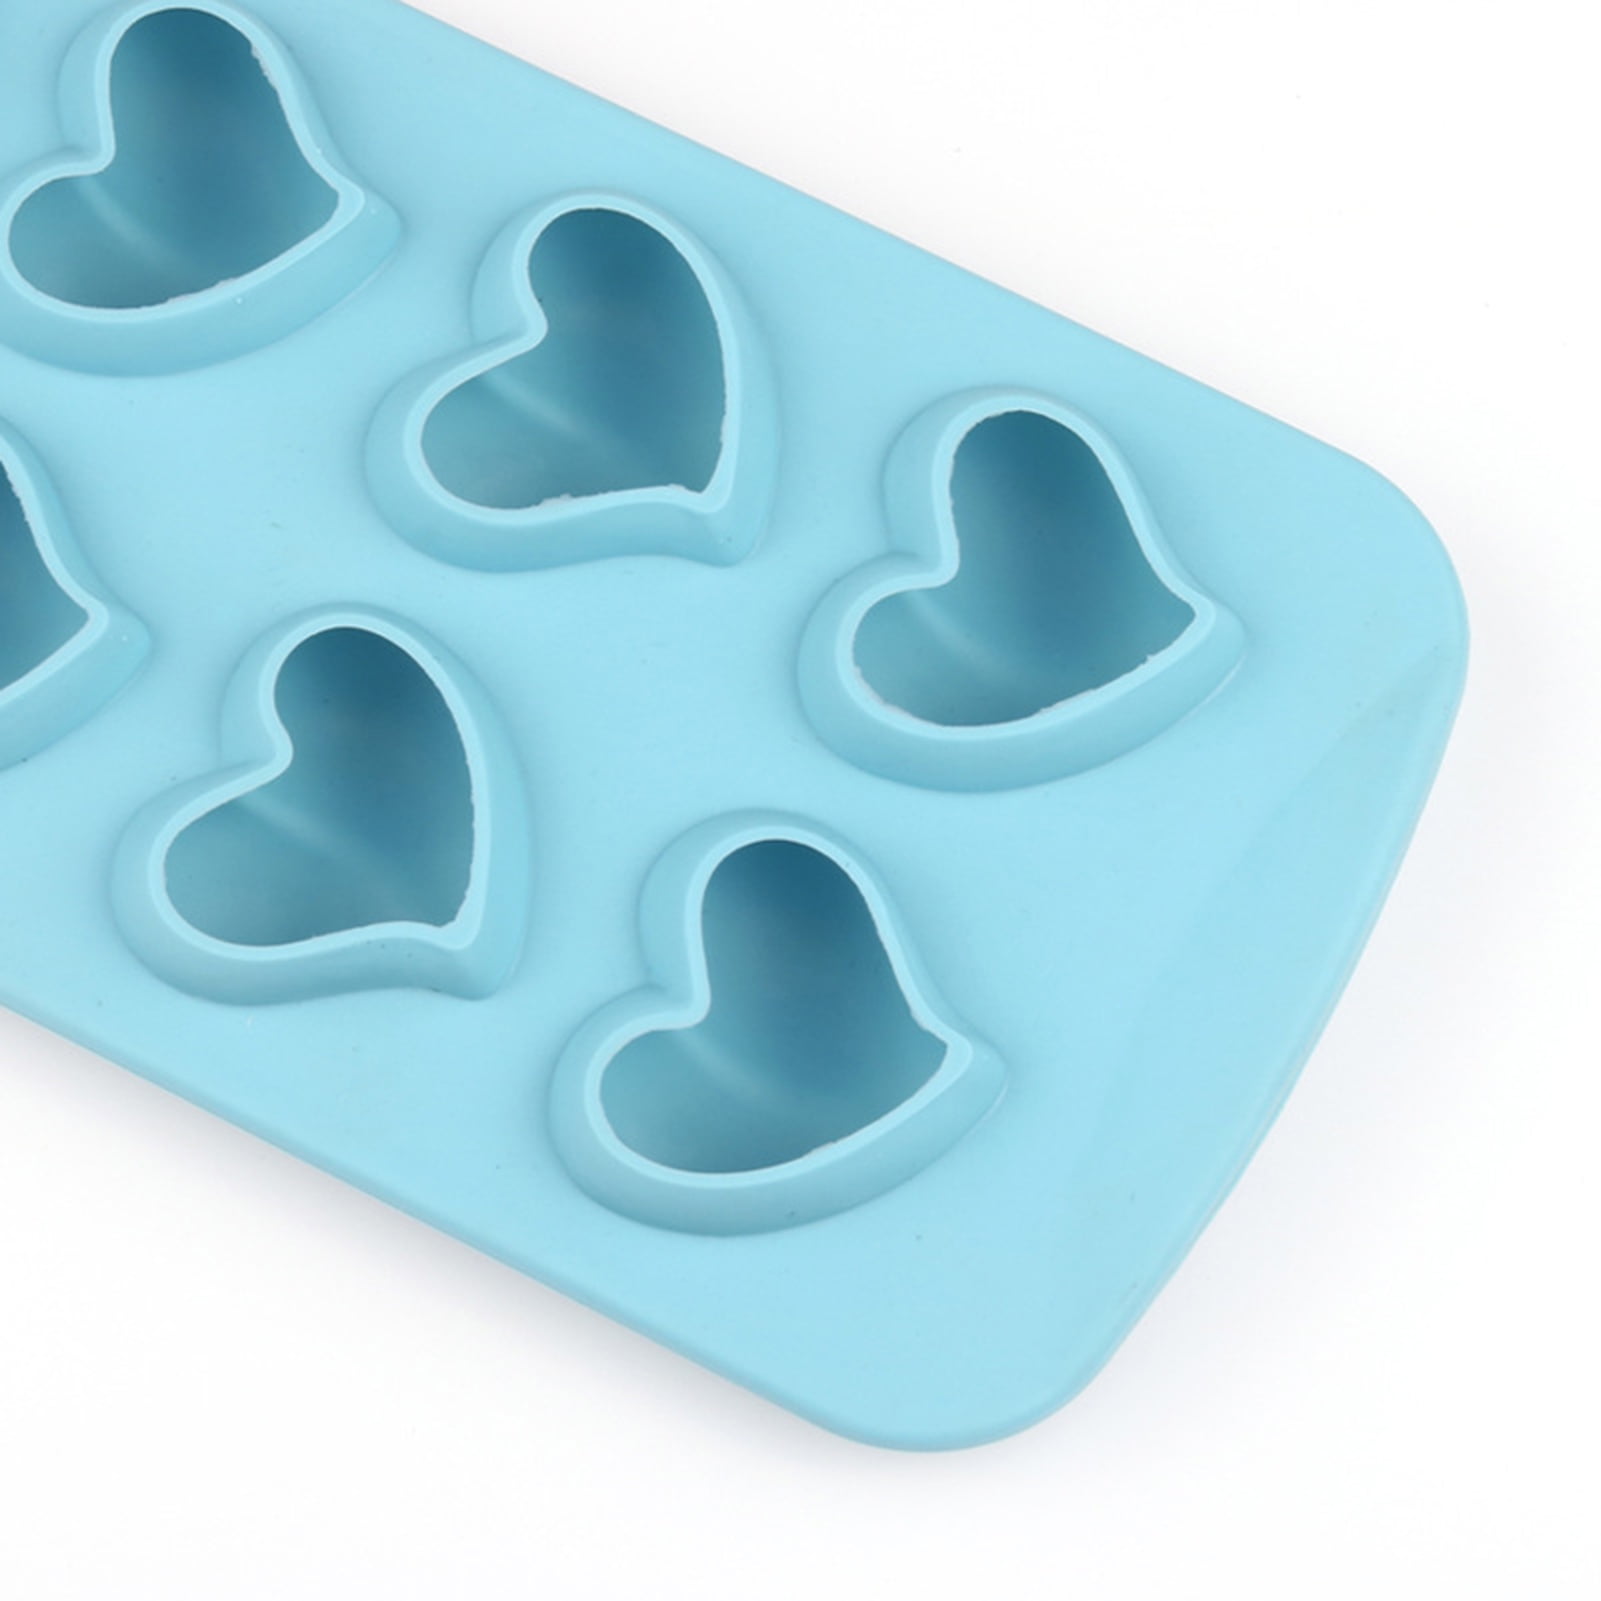 Catit Heart-Shaped Silicone Ice Tray